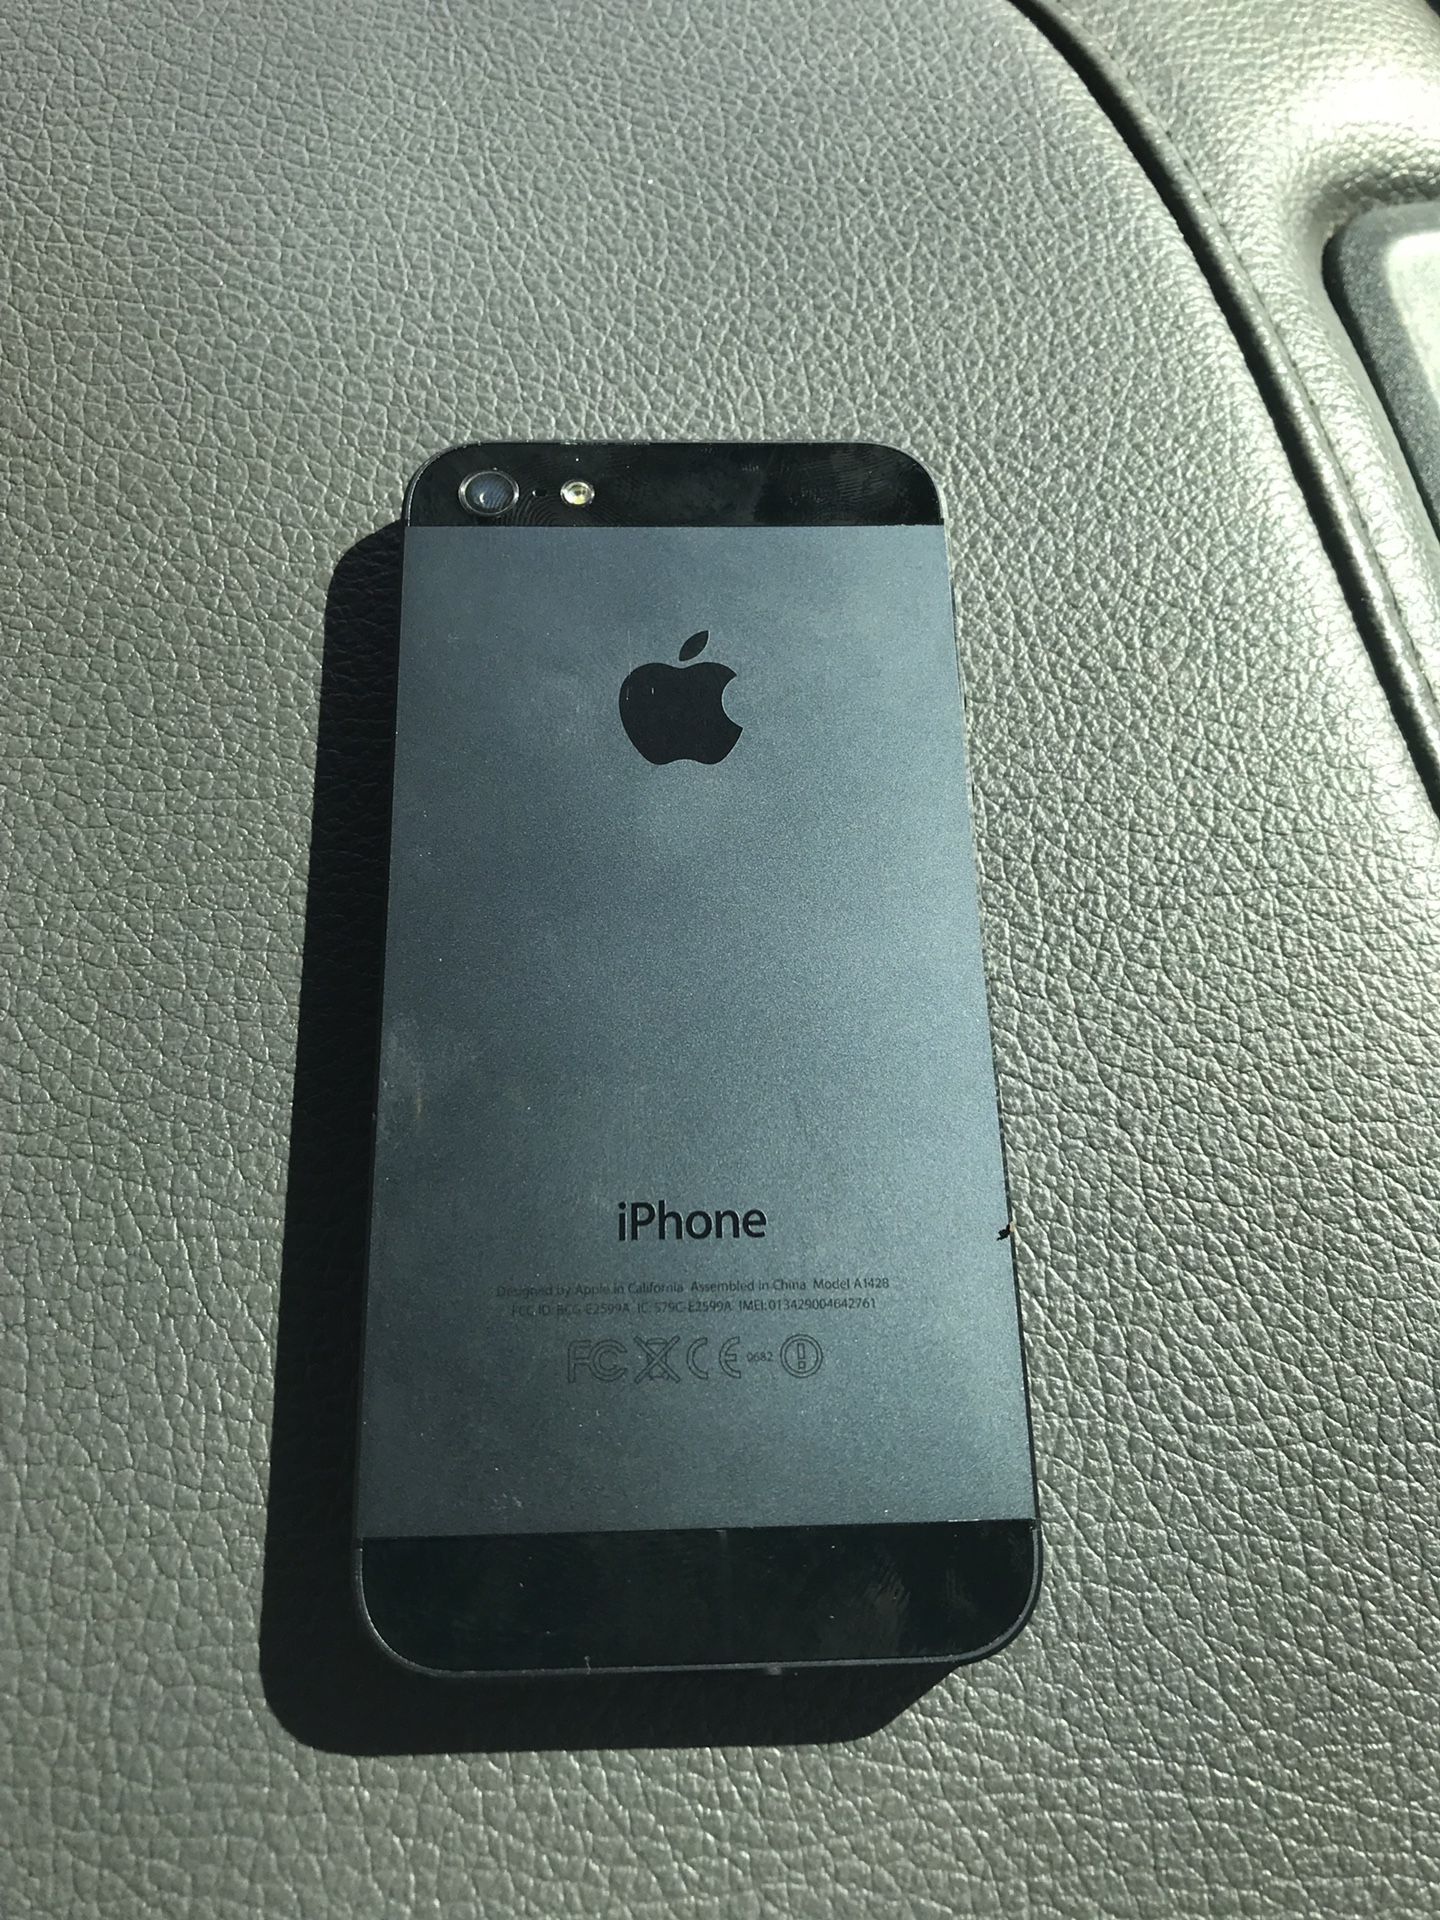 iPhone 5 16g